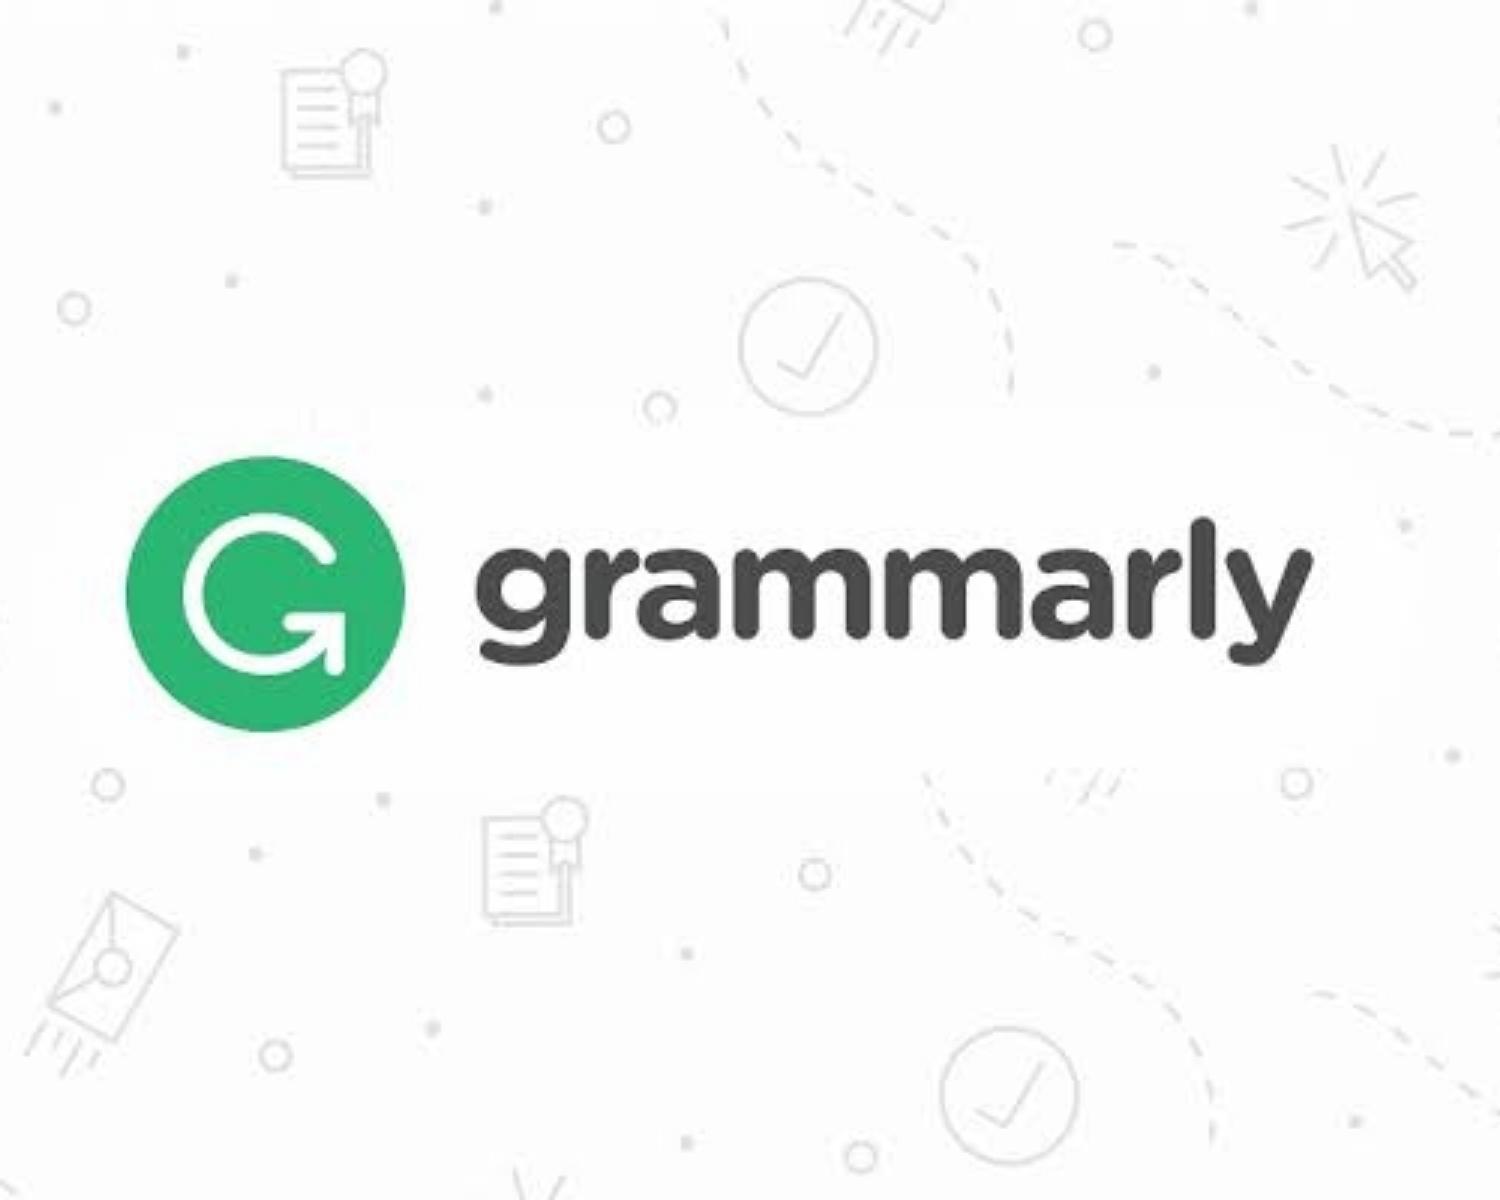 Extension 6: Grammarly